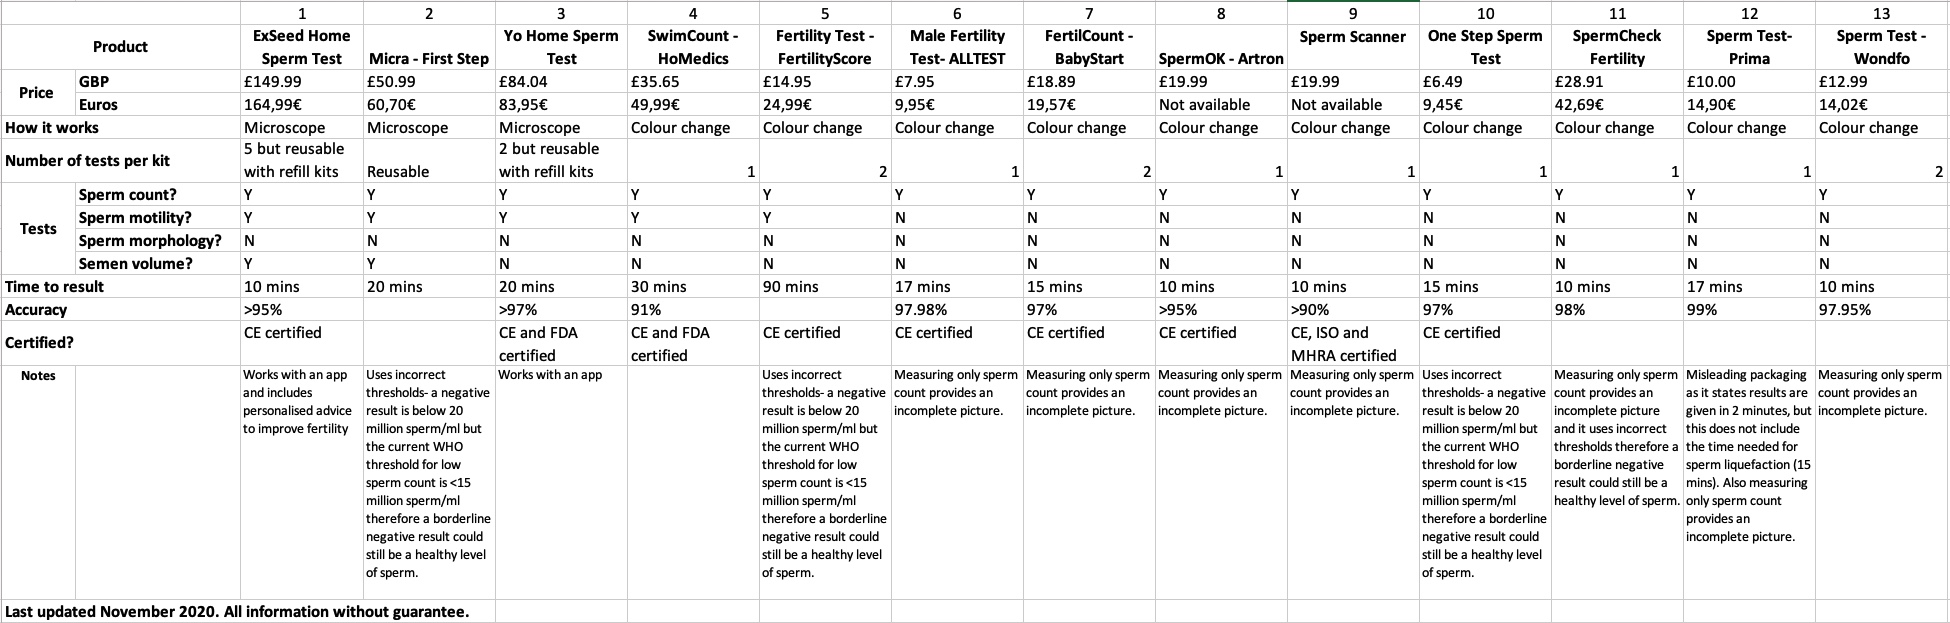 best home sperm tests comparison table